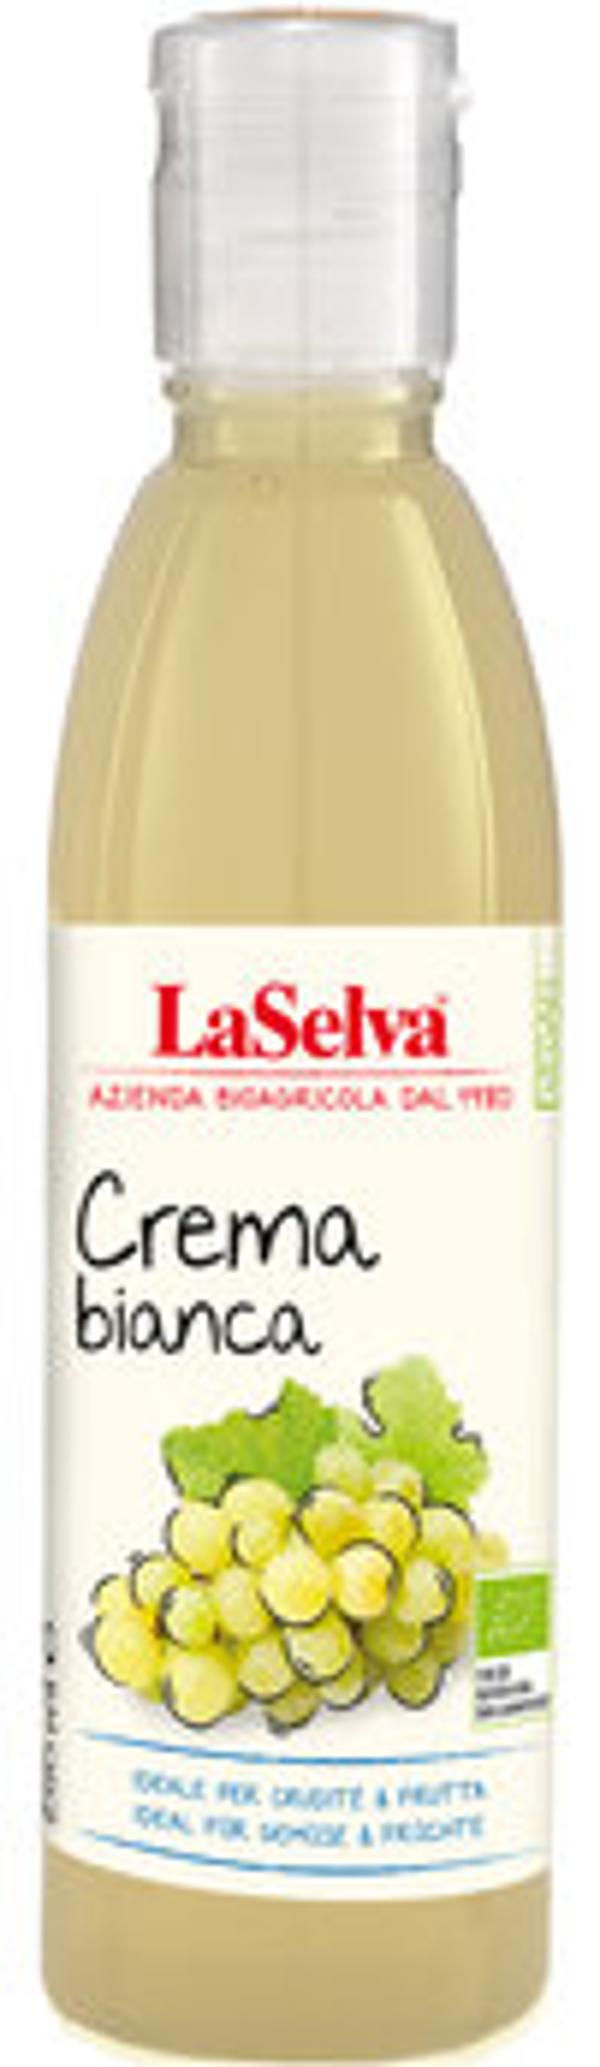 Produktfoto zu La Selva Crema di Balsamico Bianco 250ml